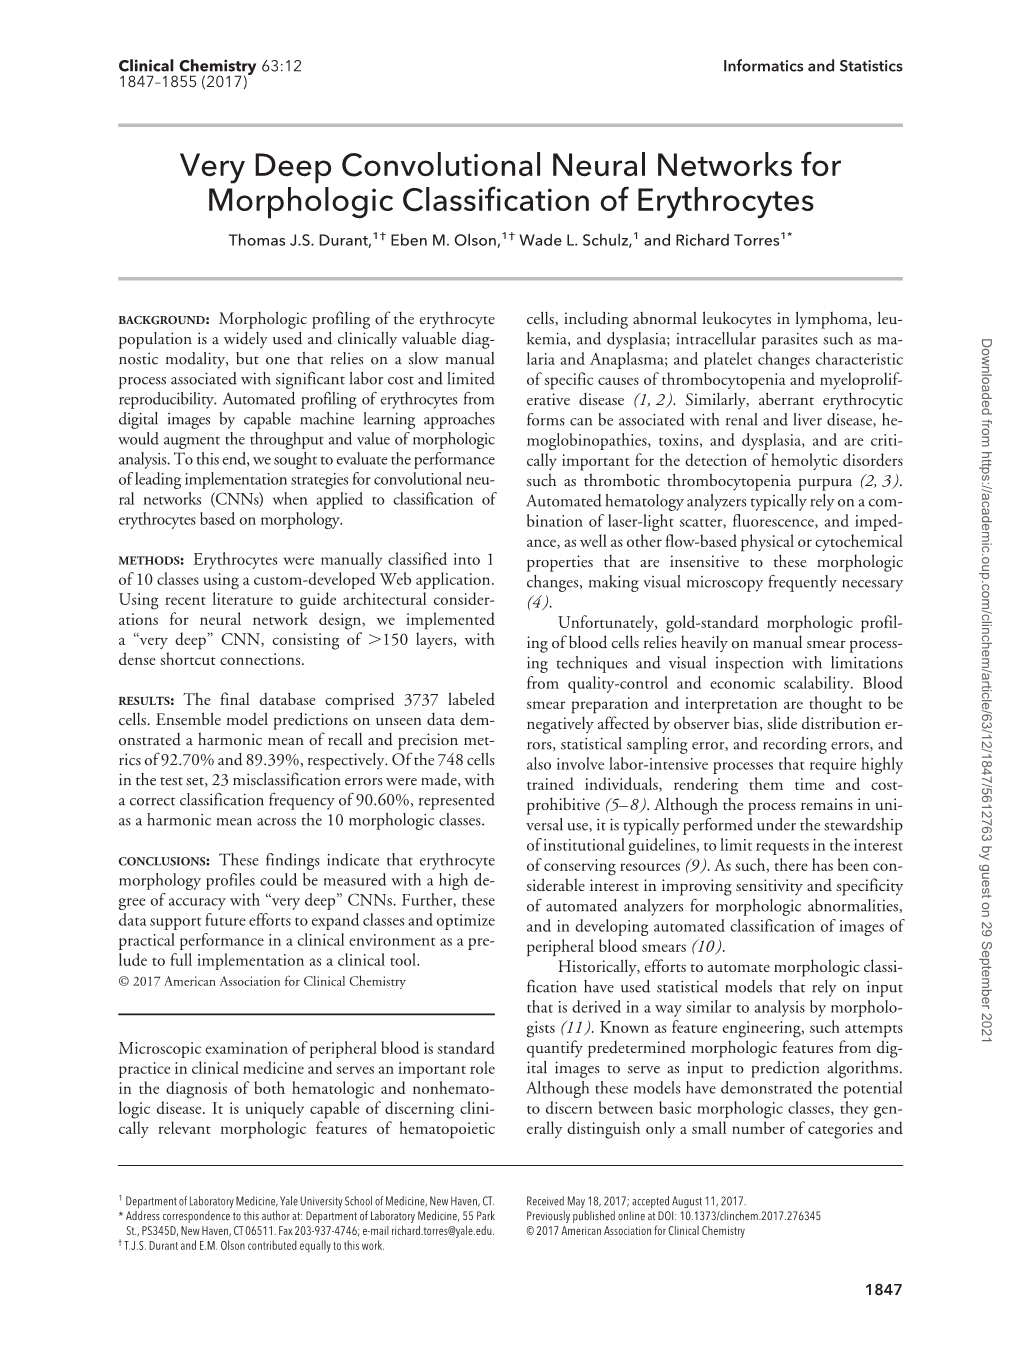 Very Deep Convolutional Neural Networks for Morphologic Classiﬁcation of Erythrocytes Thomas J.S